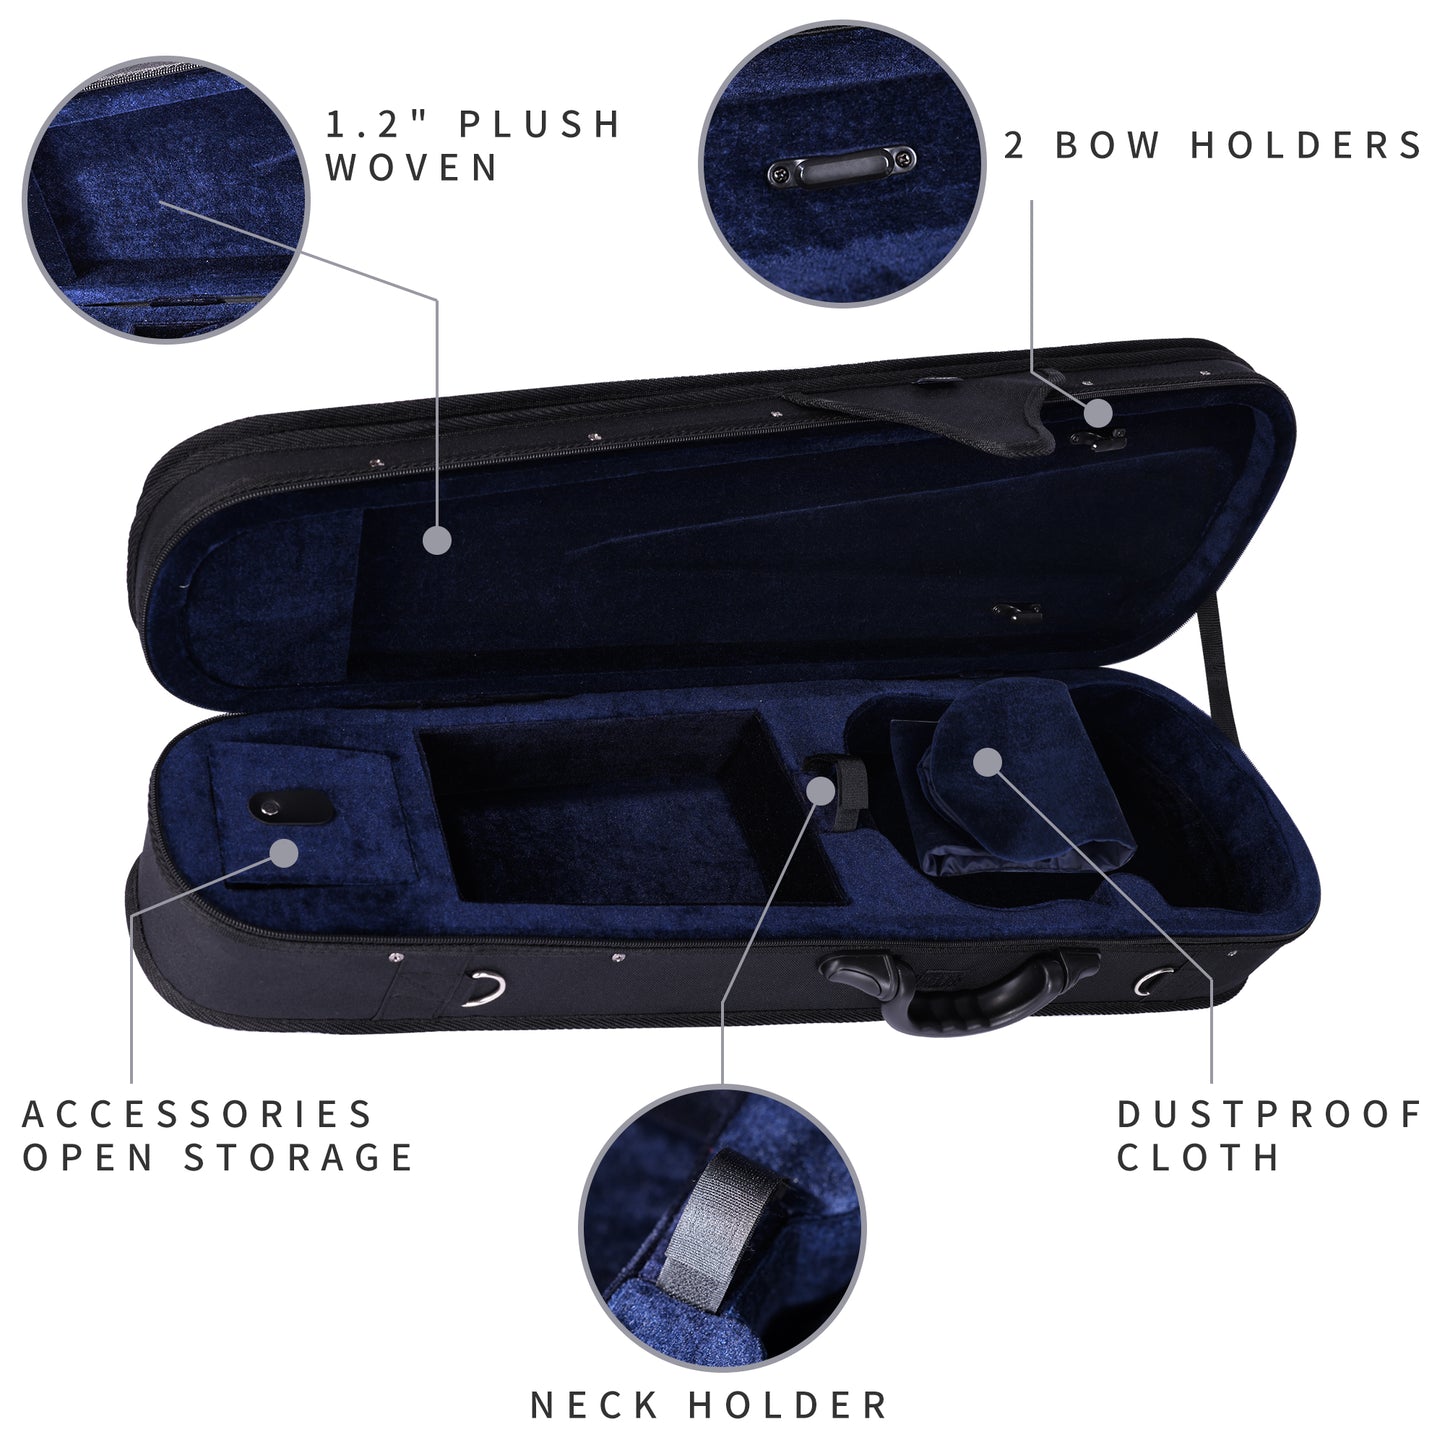 ADM 4/4 Full Size Violin Hard Case